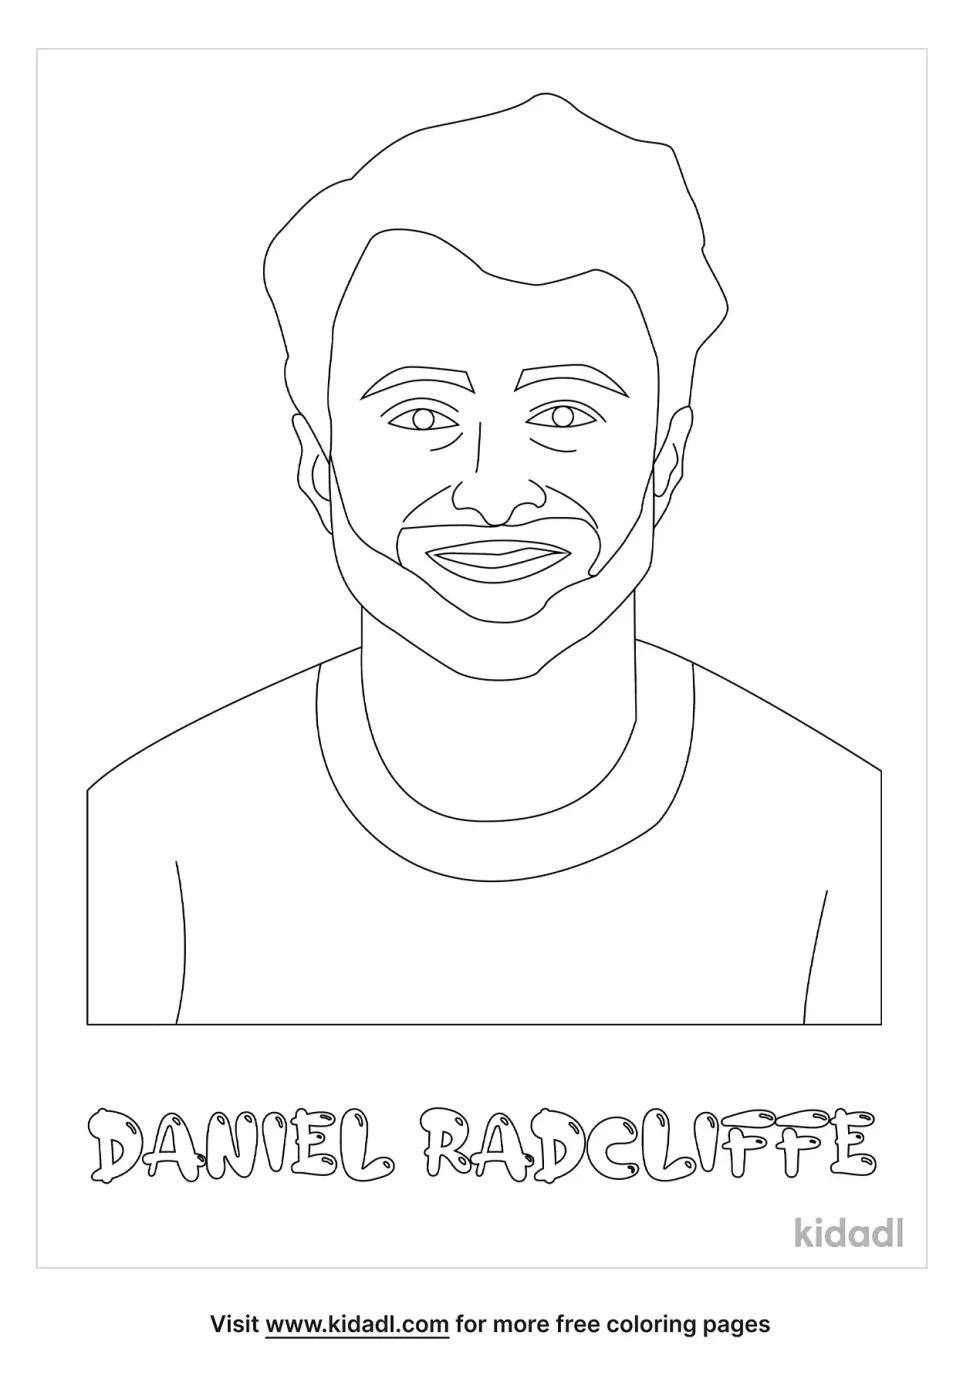 Daniel Radcliffe Coloring Page